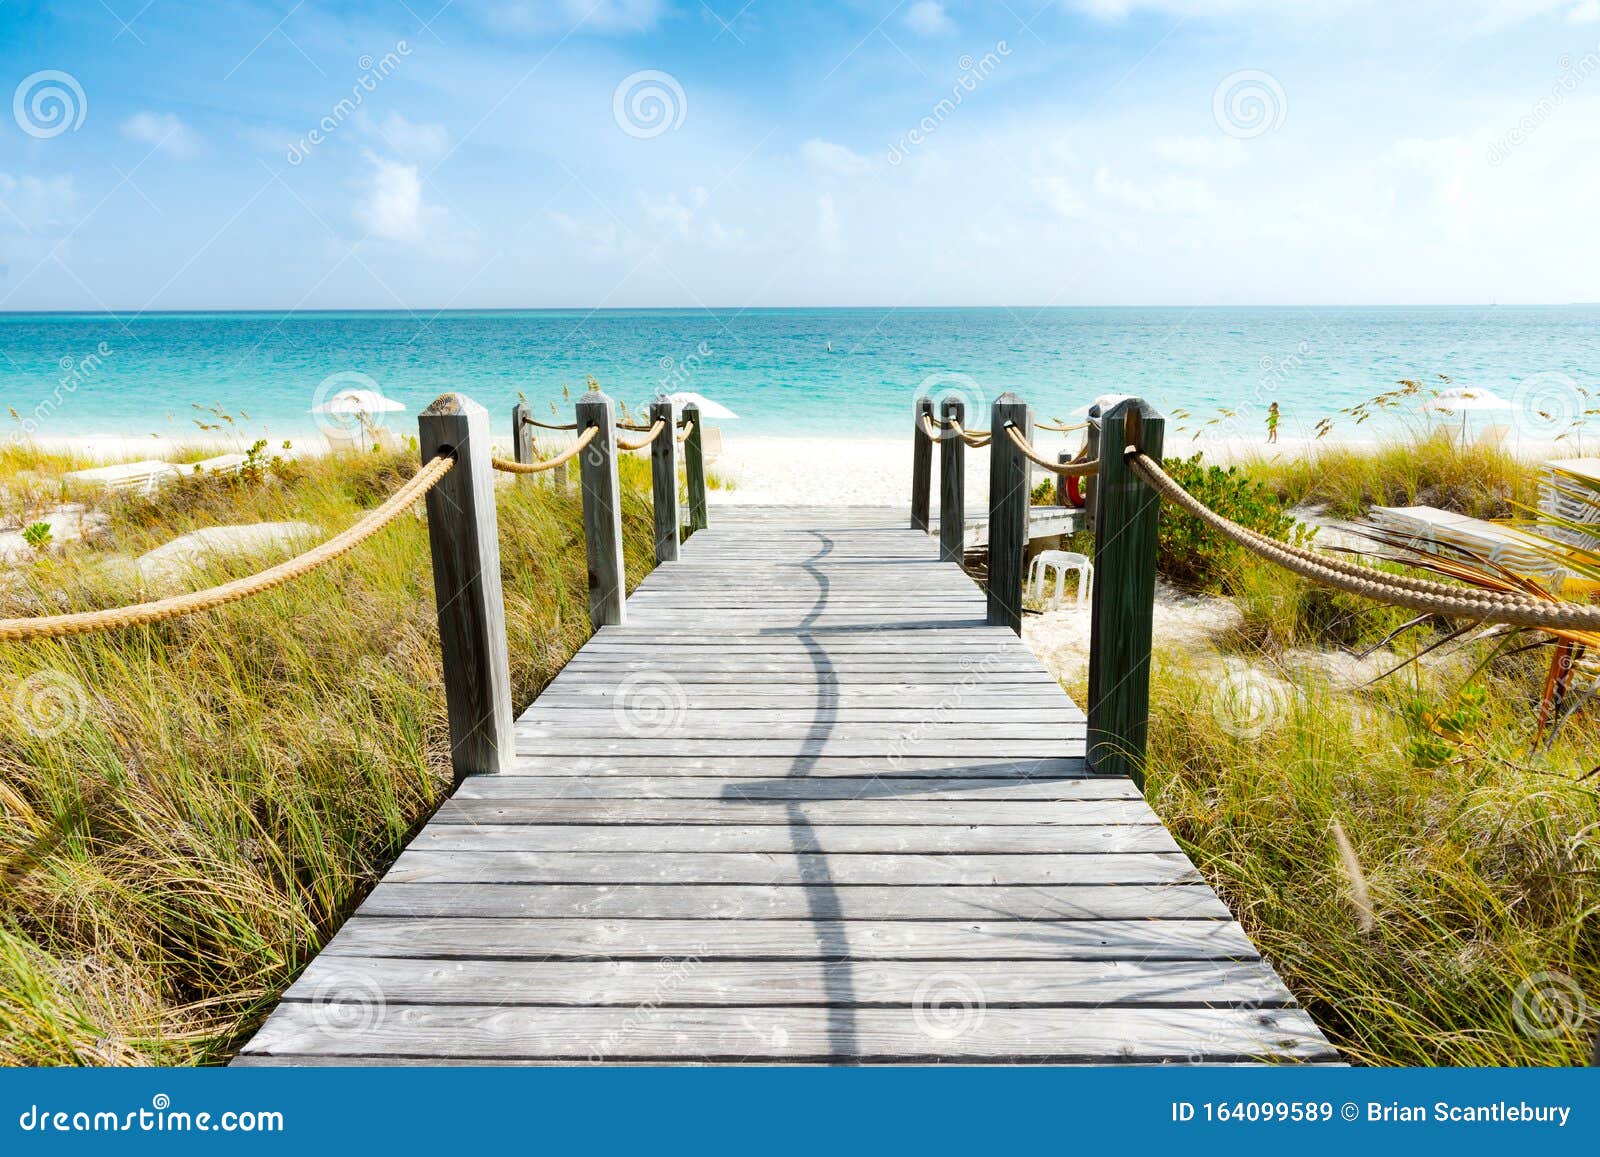 walkway leading to caribbean beach